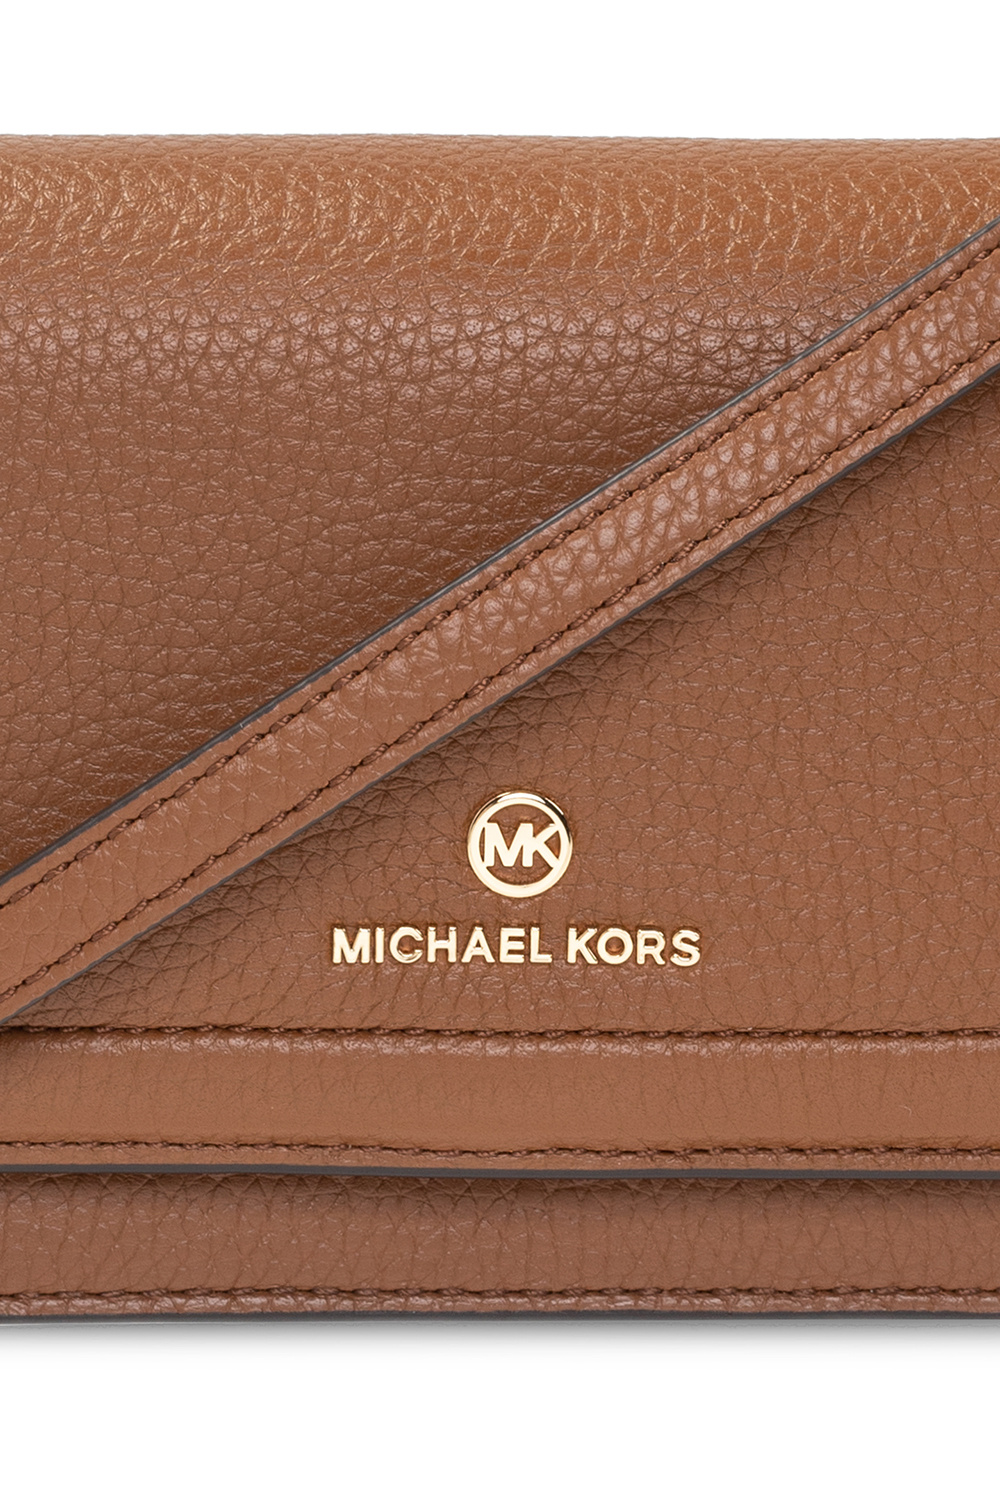 Michael Kors Bags | Michael Kors Jet Set XL Zip Clutch Wristlet Brown | Color: Brown/White | Size: Os | Mybagobsession's Closet